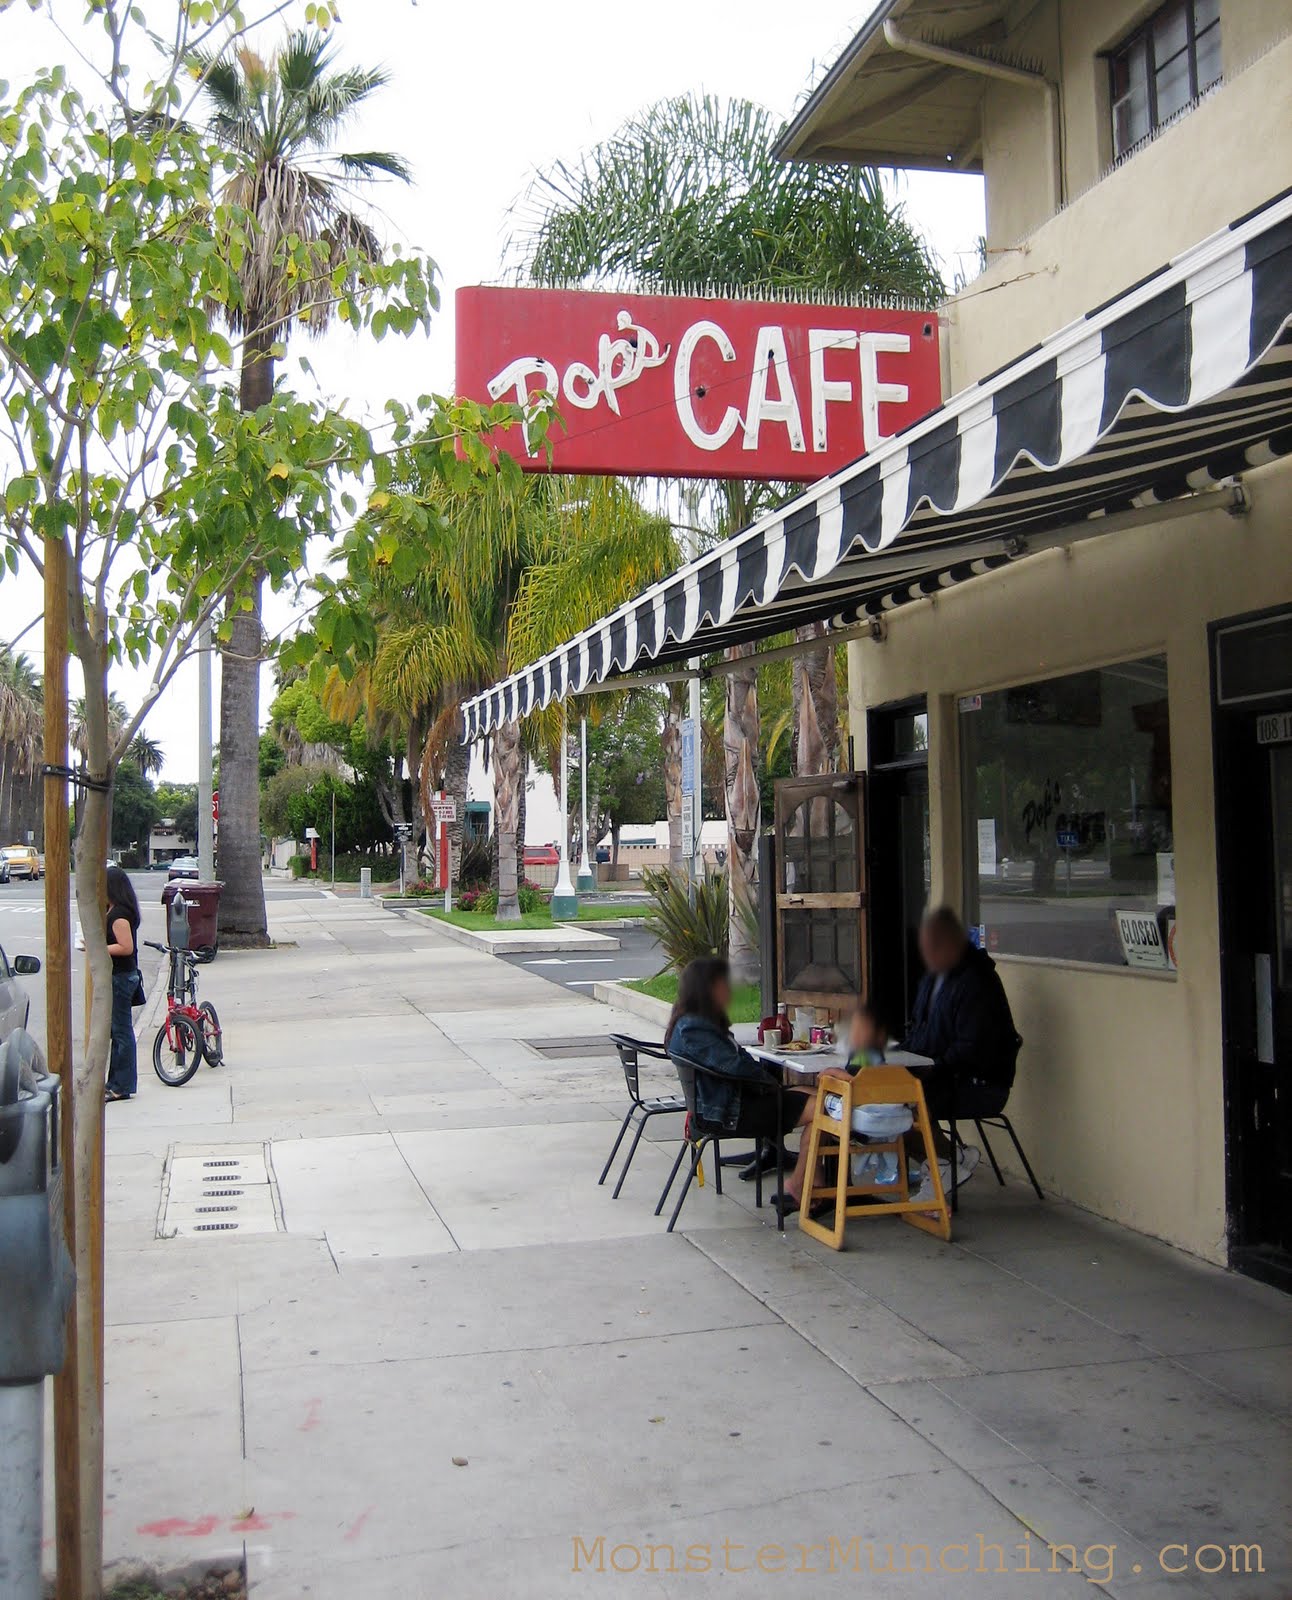 Venlighed Illusion Land Monster Munching: Pop's Cafe - Santa Ana